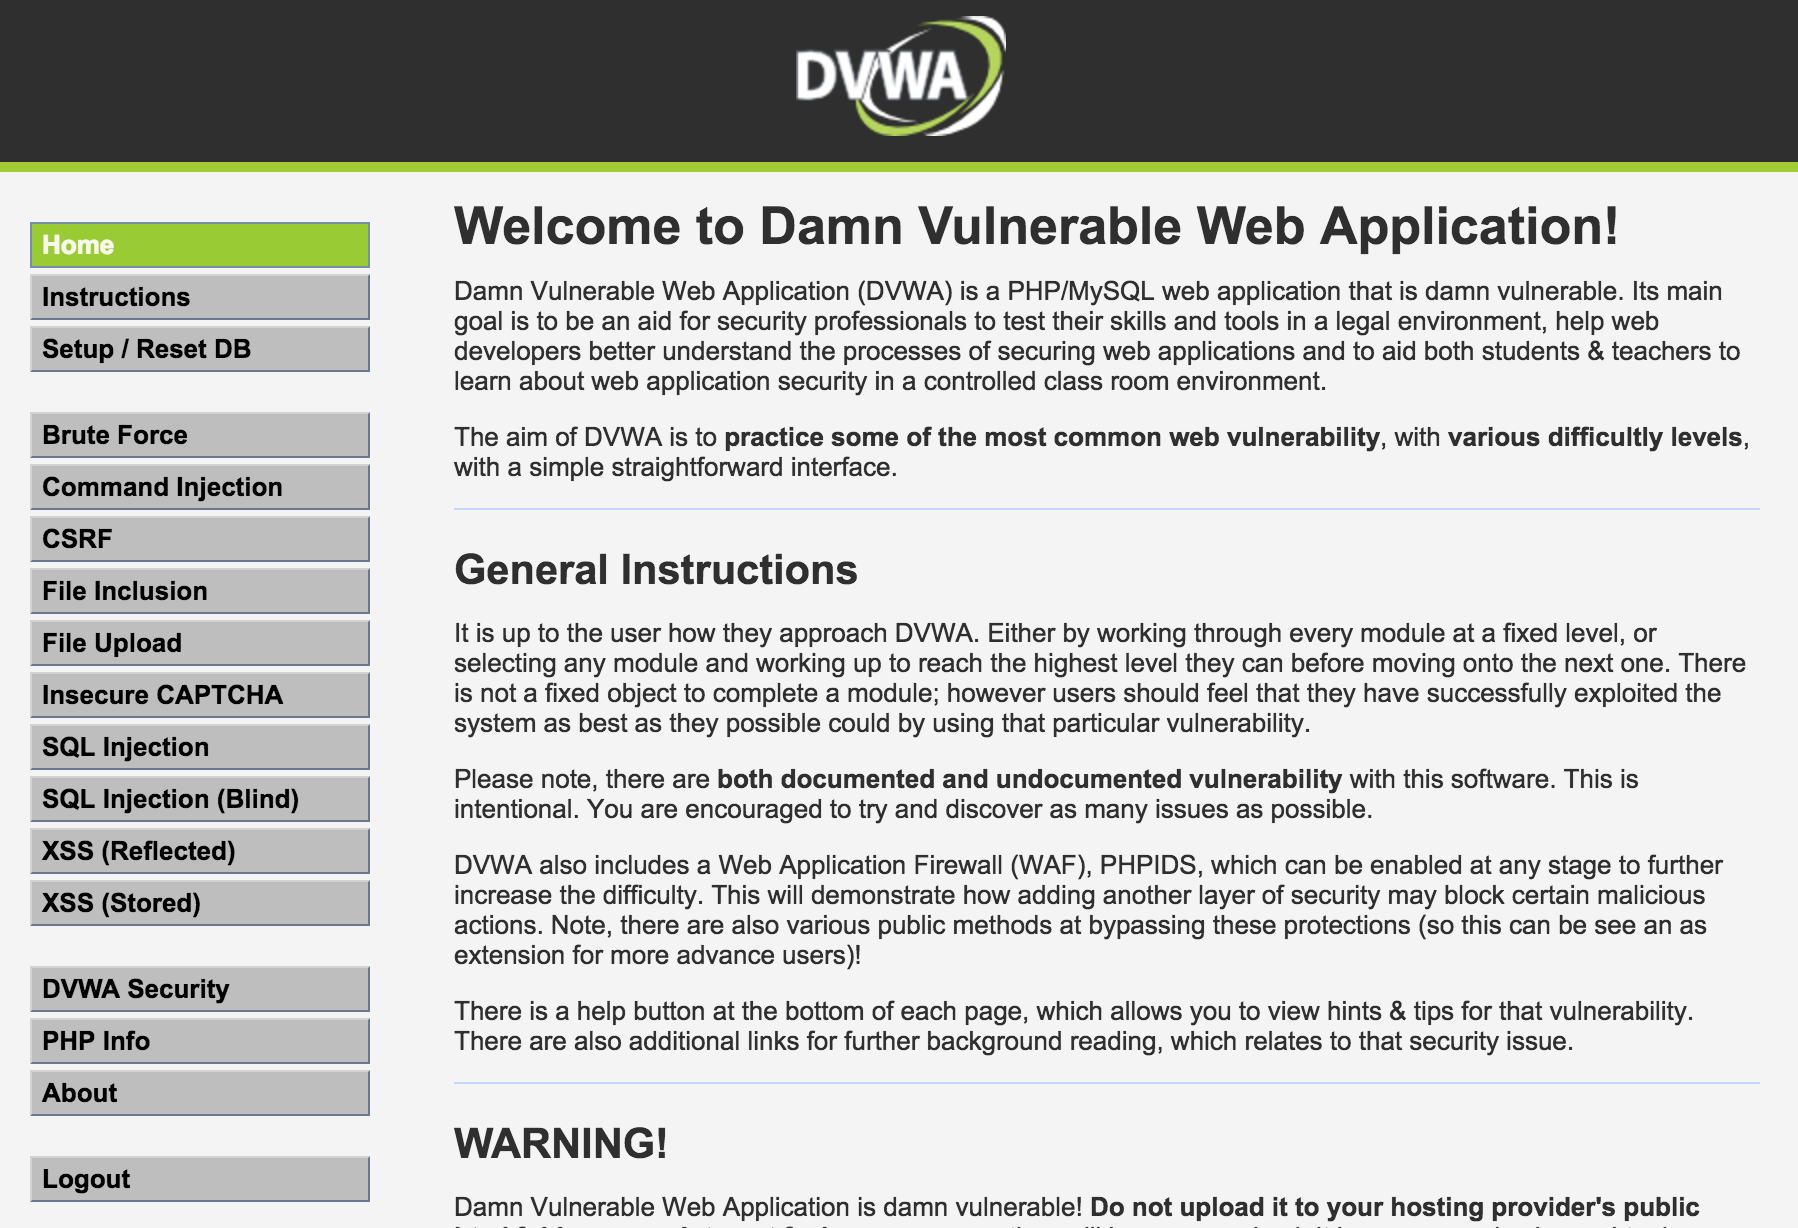 Damn Vulnerable Web Application DVWA